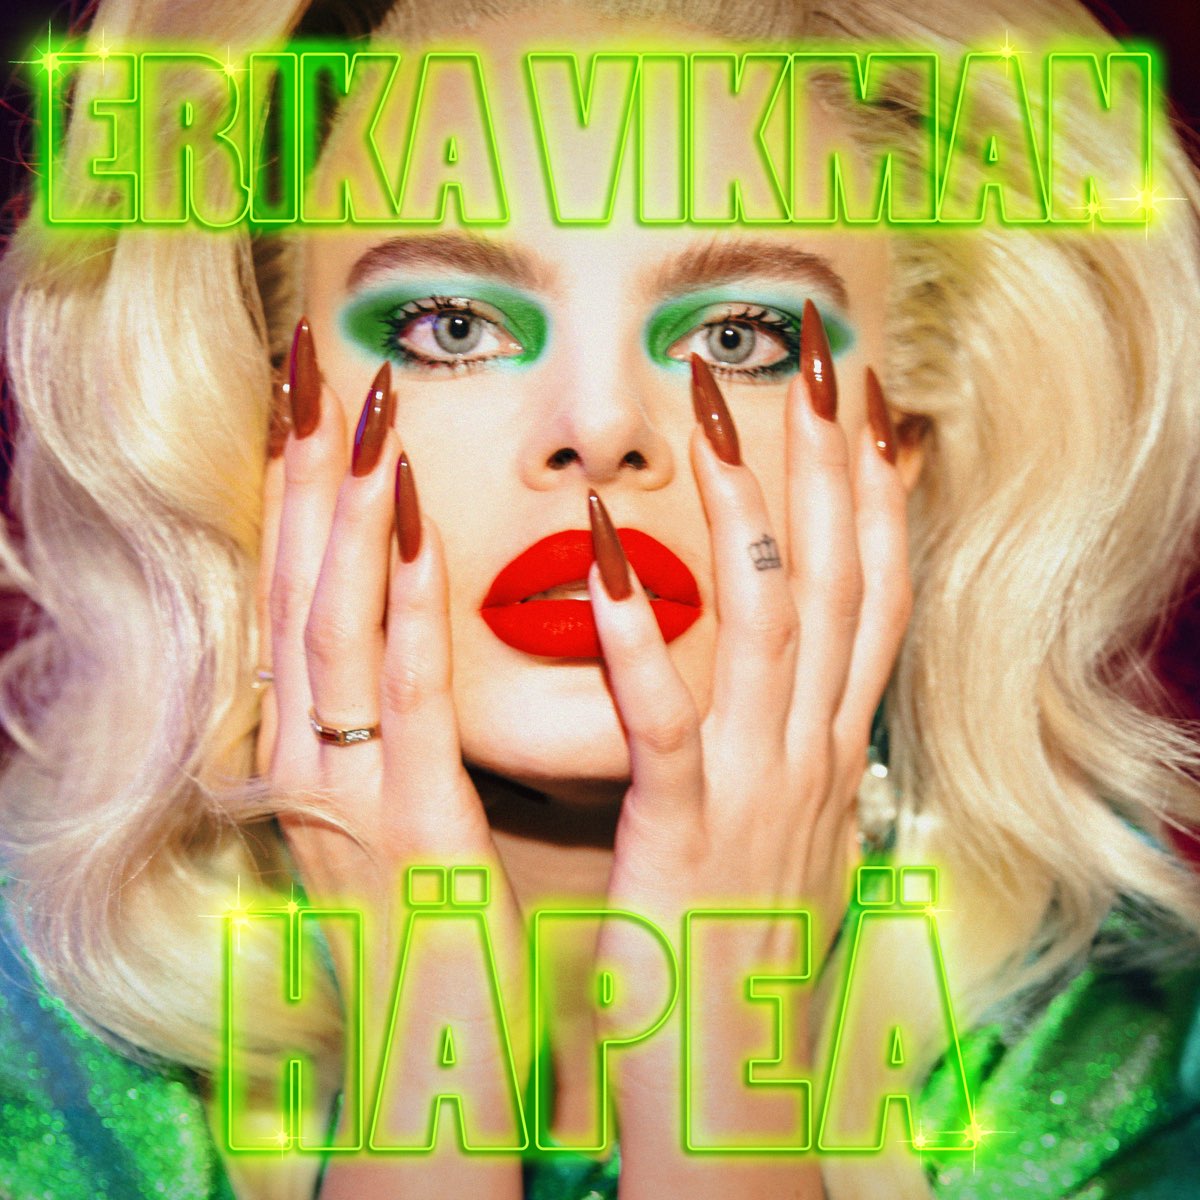 Häpeä - Single by Erika Vikman on Apple Music